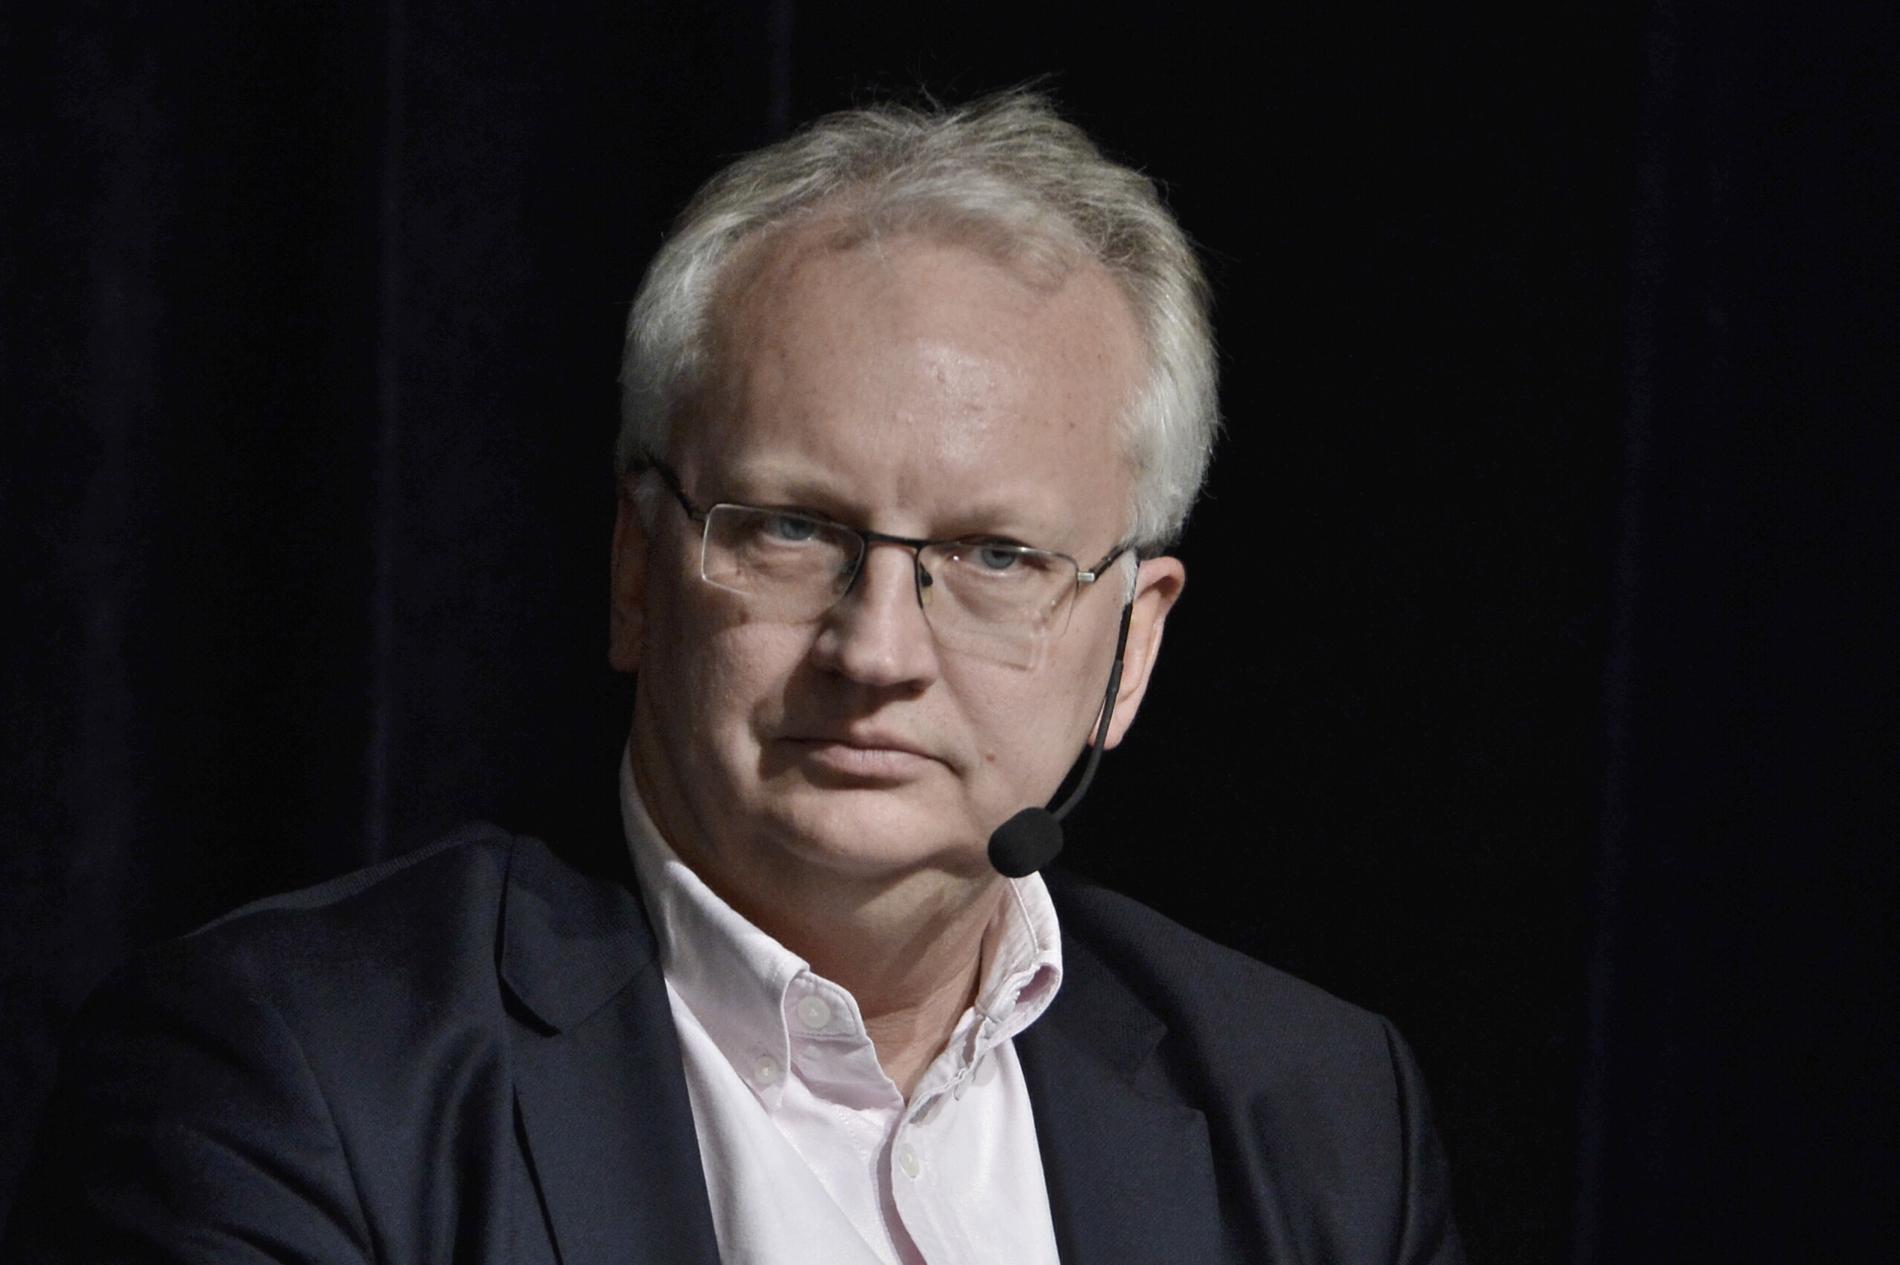 Den tidigare socialdemokratiske finansministern Pär Nuder blir styrelseledamot i vindkraftbolaget Hexicon. Arkivbild.